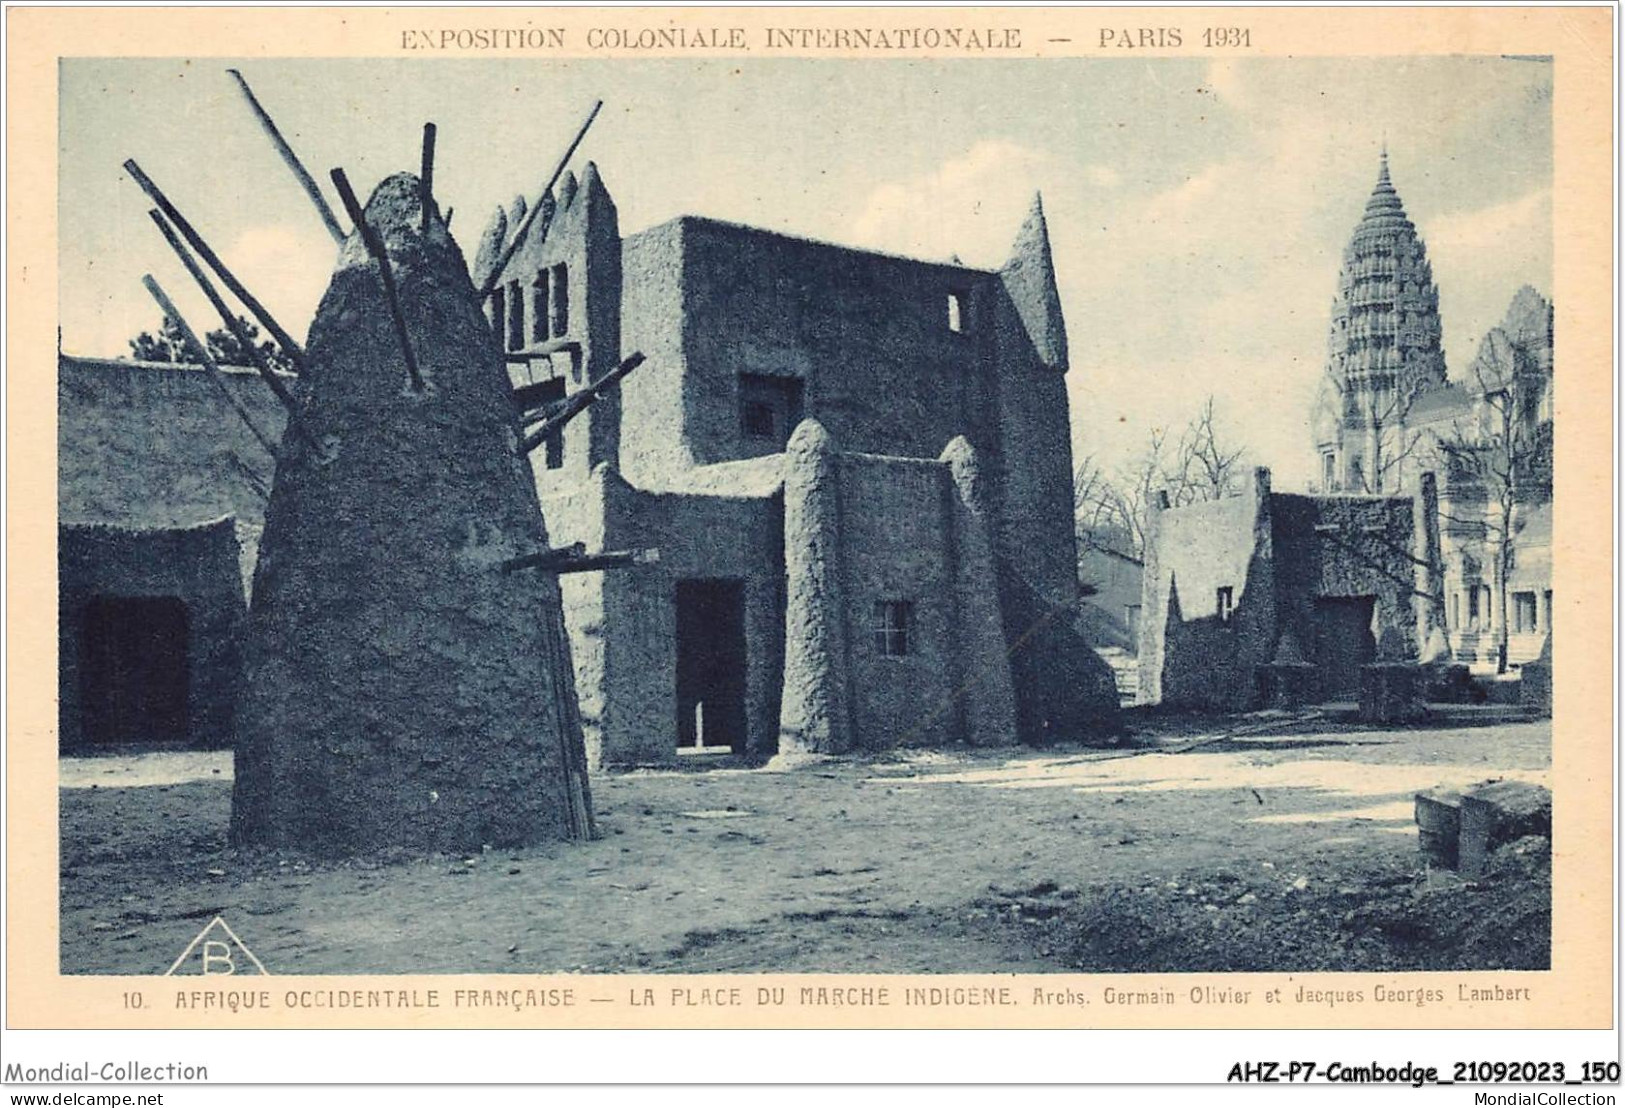 AHZP7-CAMBODGE-0671 - EXPOSITION COLONIALE INTERNATIONALE - PARIS 1931 - AFRIQUE OCCIDENTALE FRANCAISE - MARCHE INDIGENE - Kambodscha